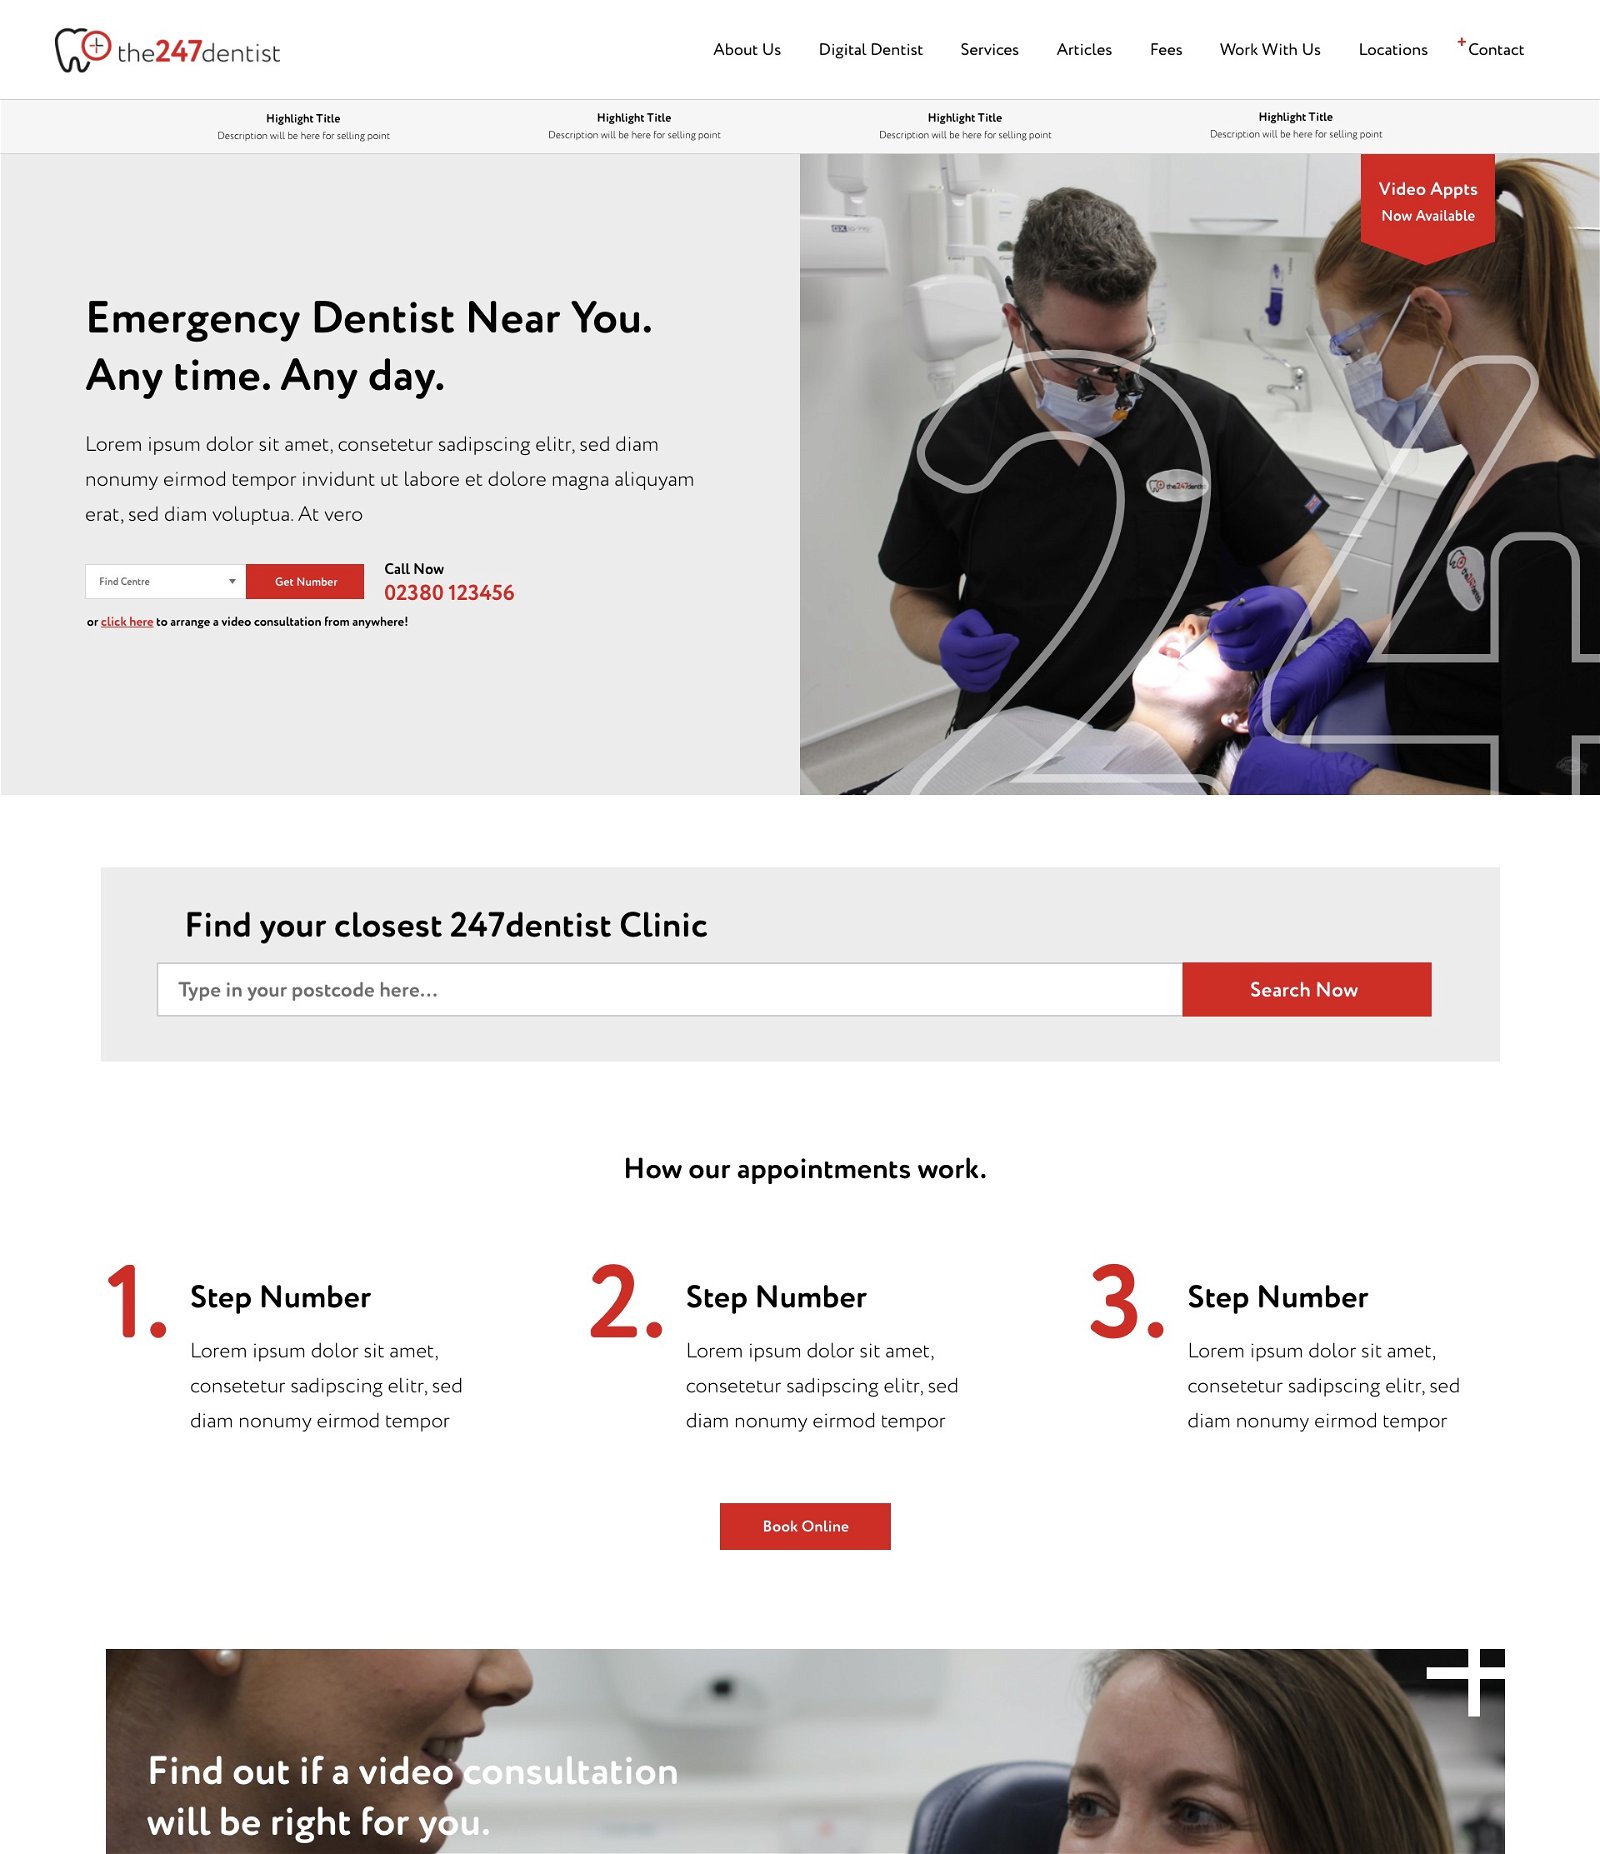 A design concept for The 247 Dentist's website.